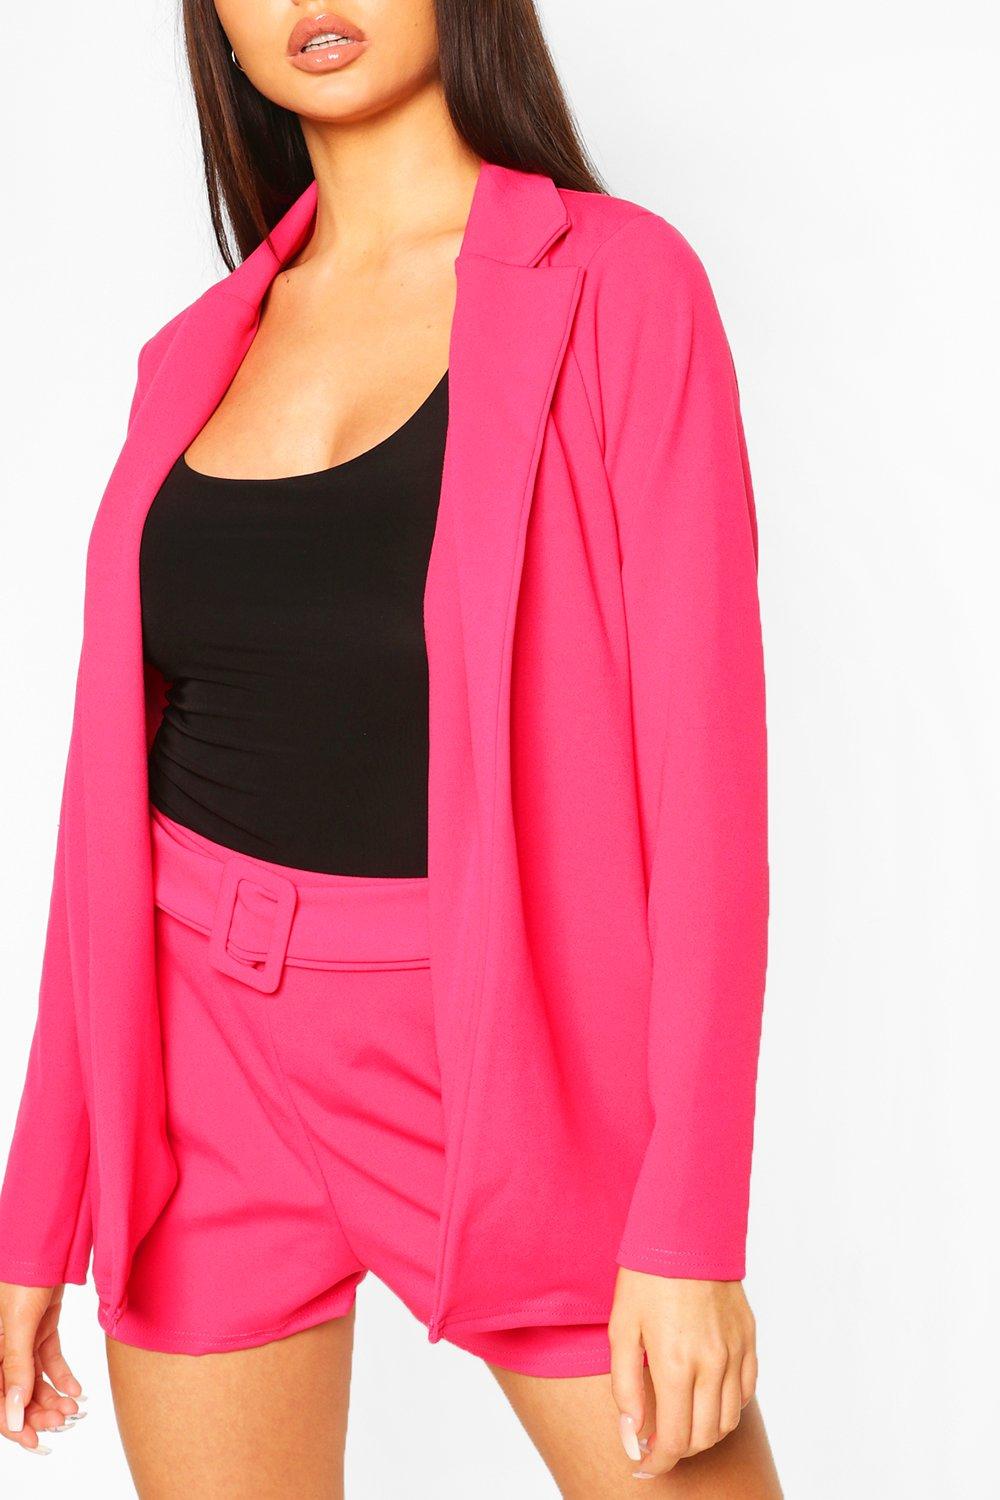 boohoo Women's Blazer And Self Fabric Belt Short Suit Set|Size: 6|hot pink